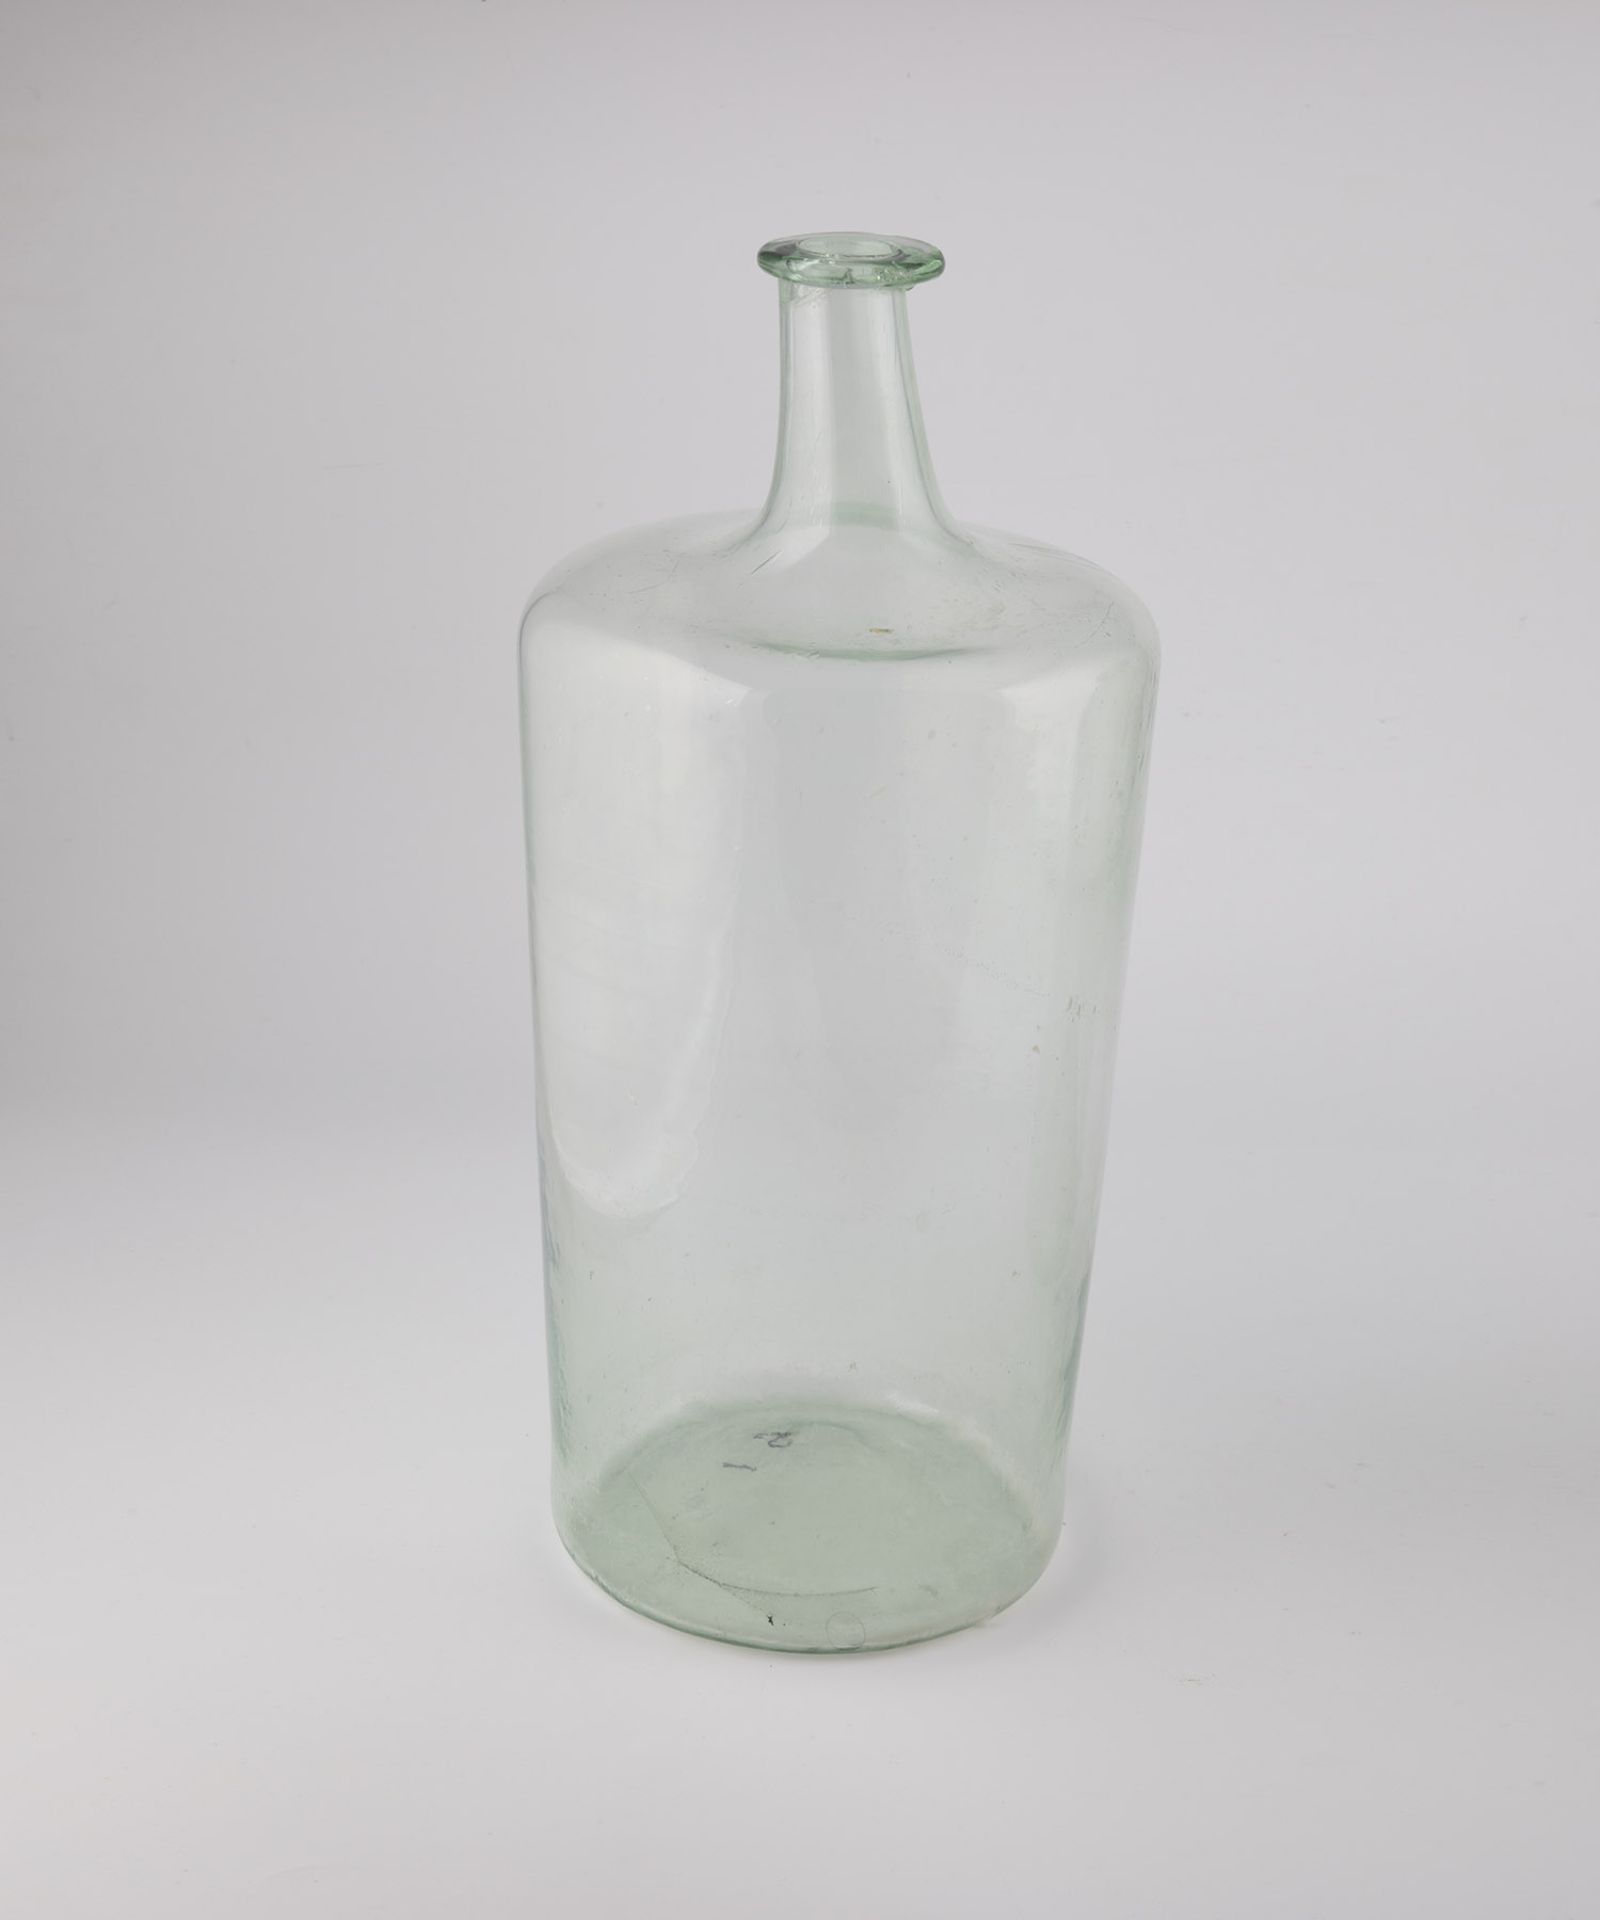 Large storage bottle Probably Austria, 19th century Greenish glass with slightly raised bottom.